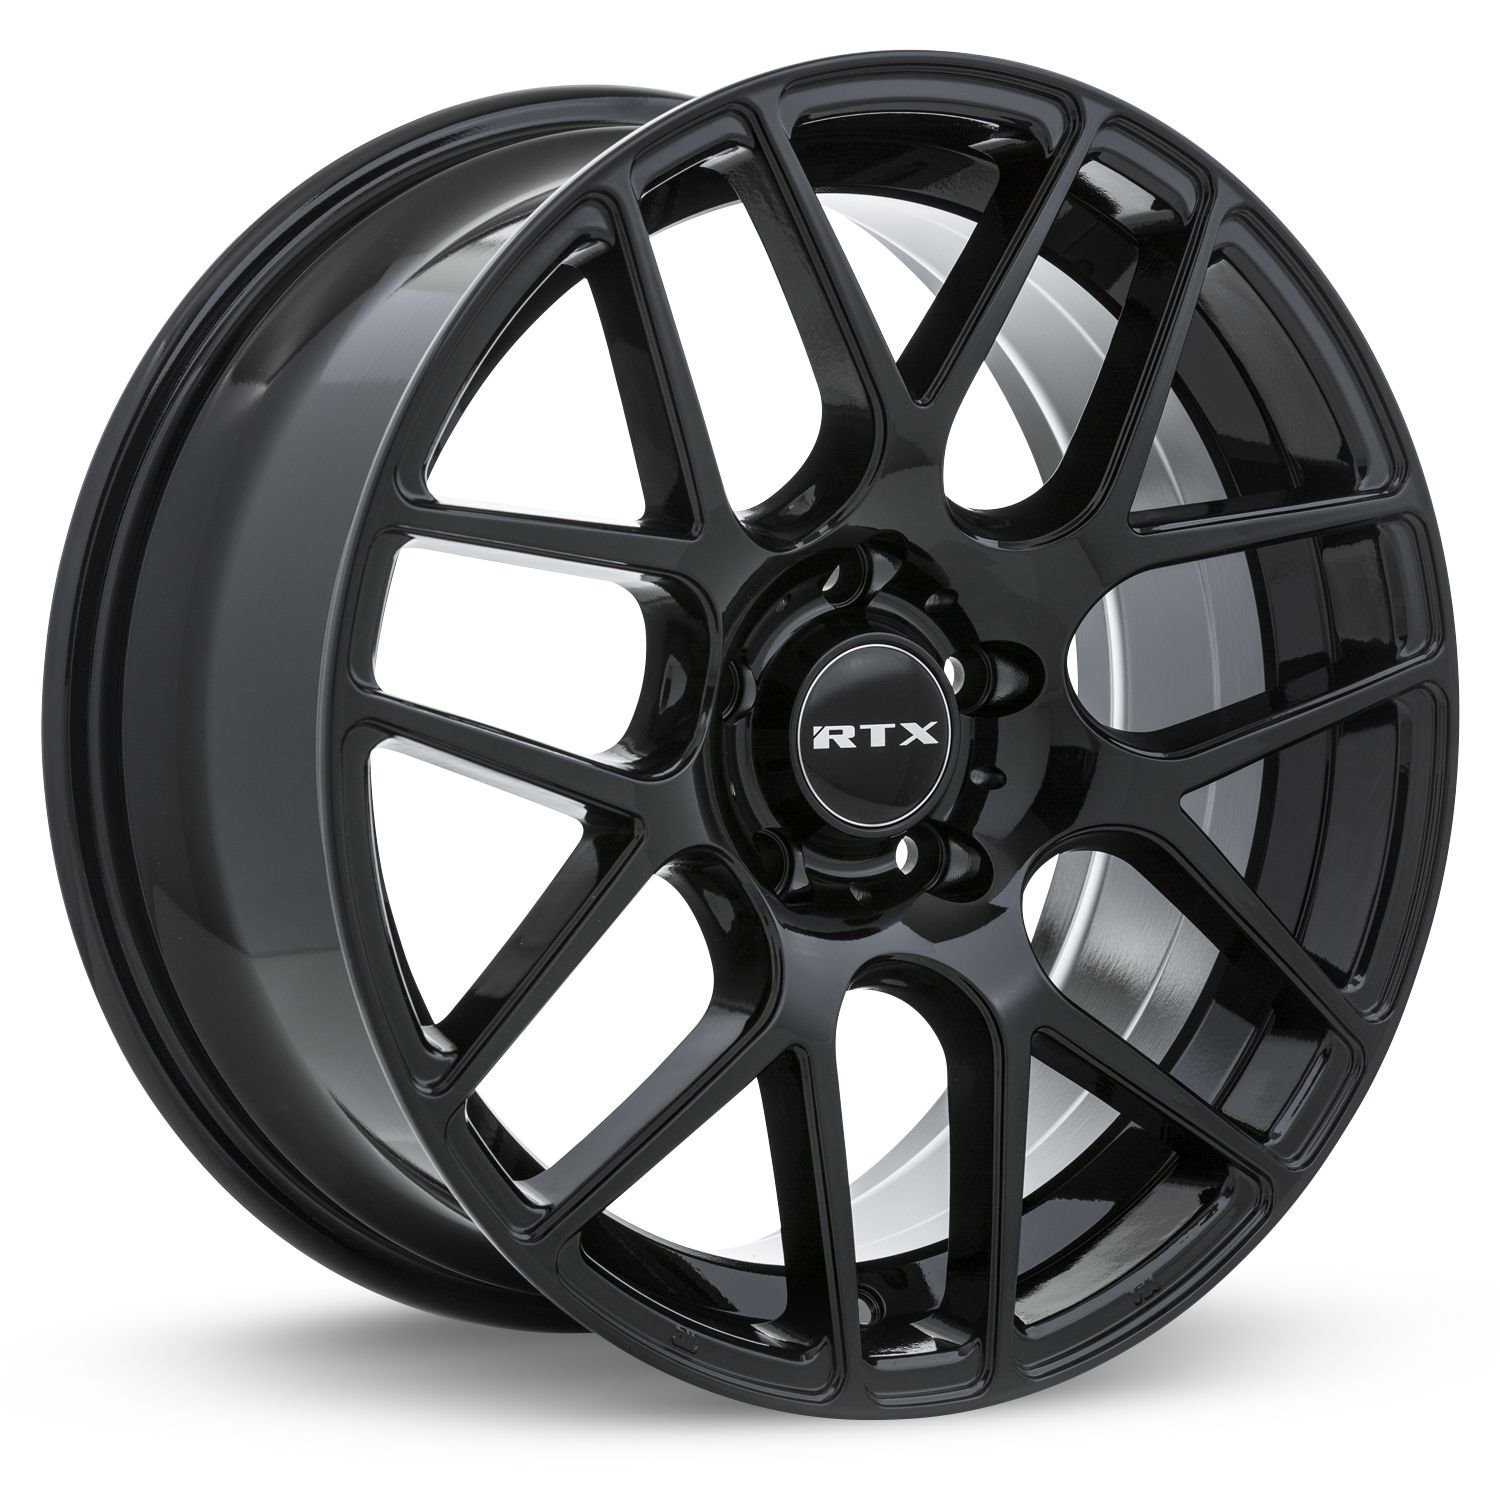 082757 RTX-Series Envy Wheel [Size: 18" x 8"] Gloss Black Finish